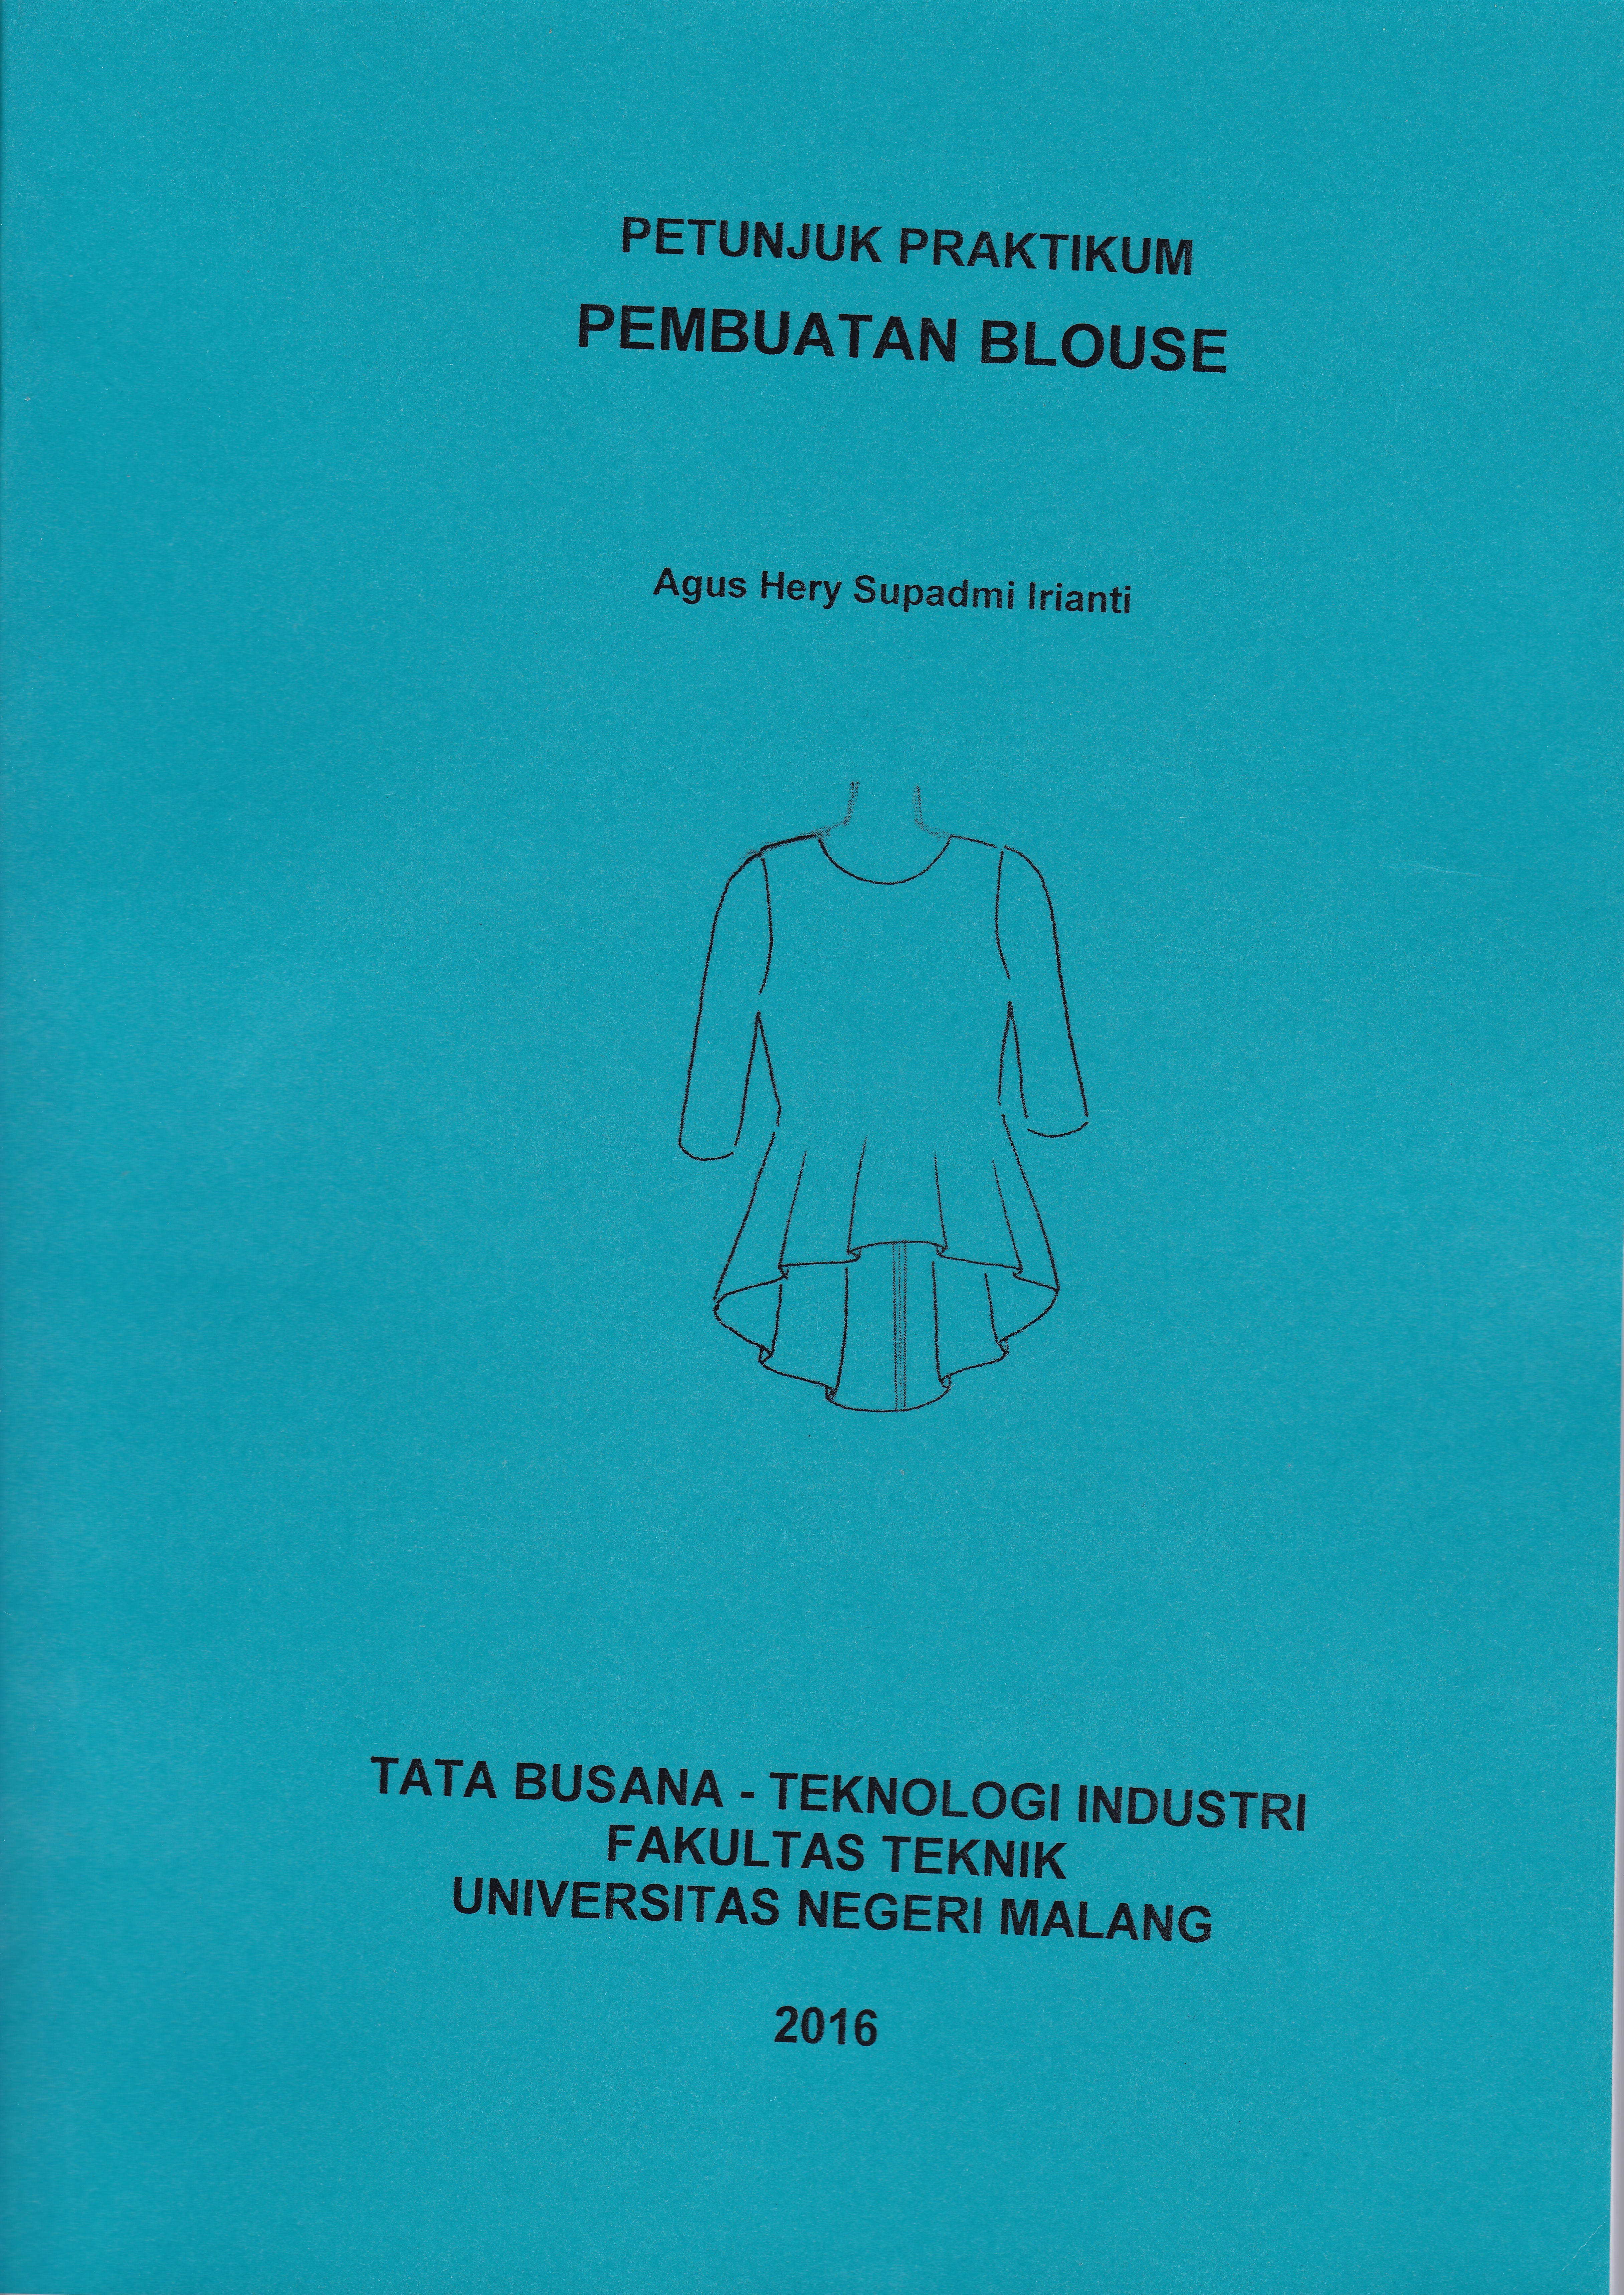 Buku “Petunjuk Praktikum Pembuatan BLOUSE” oleh Dr. Agus Hery Supadmi Irianti, M.Pd.